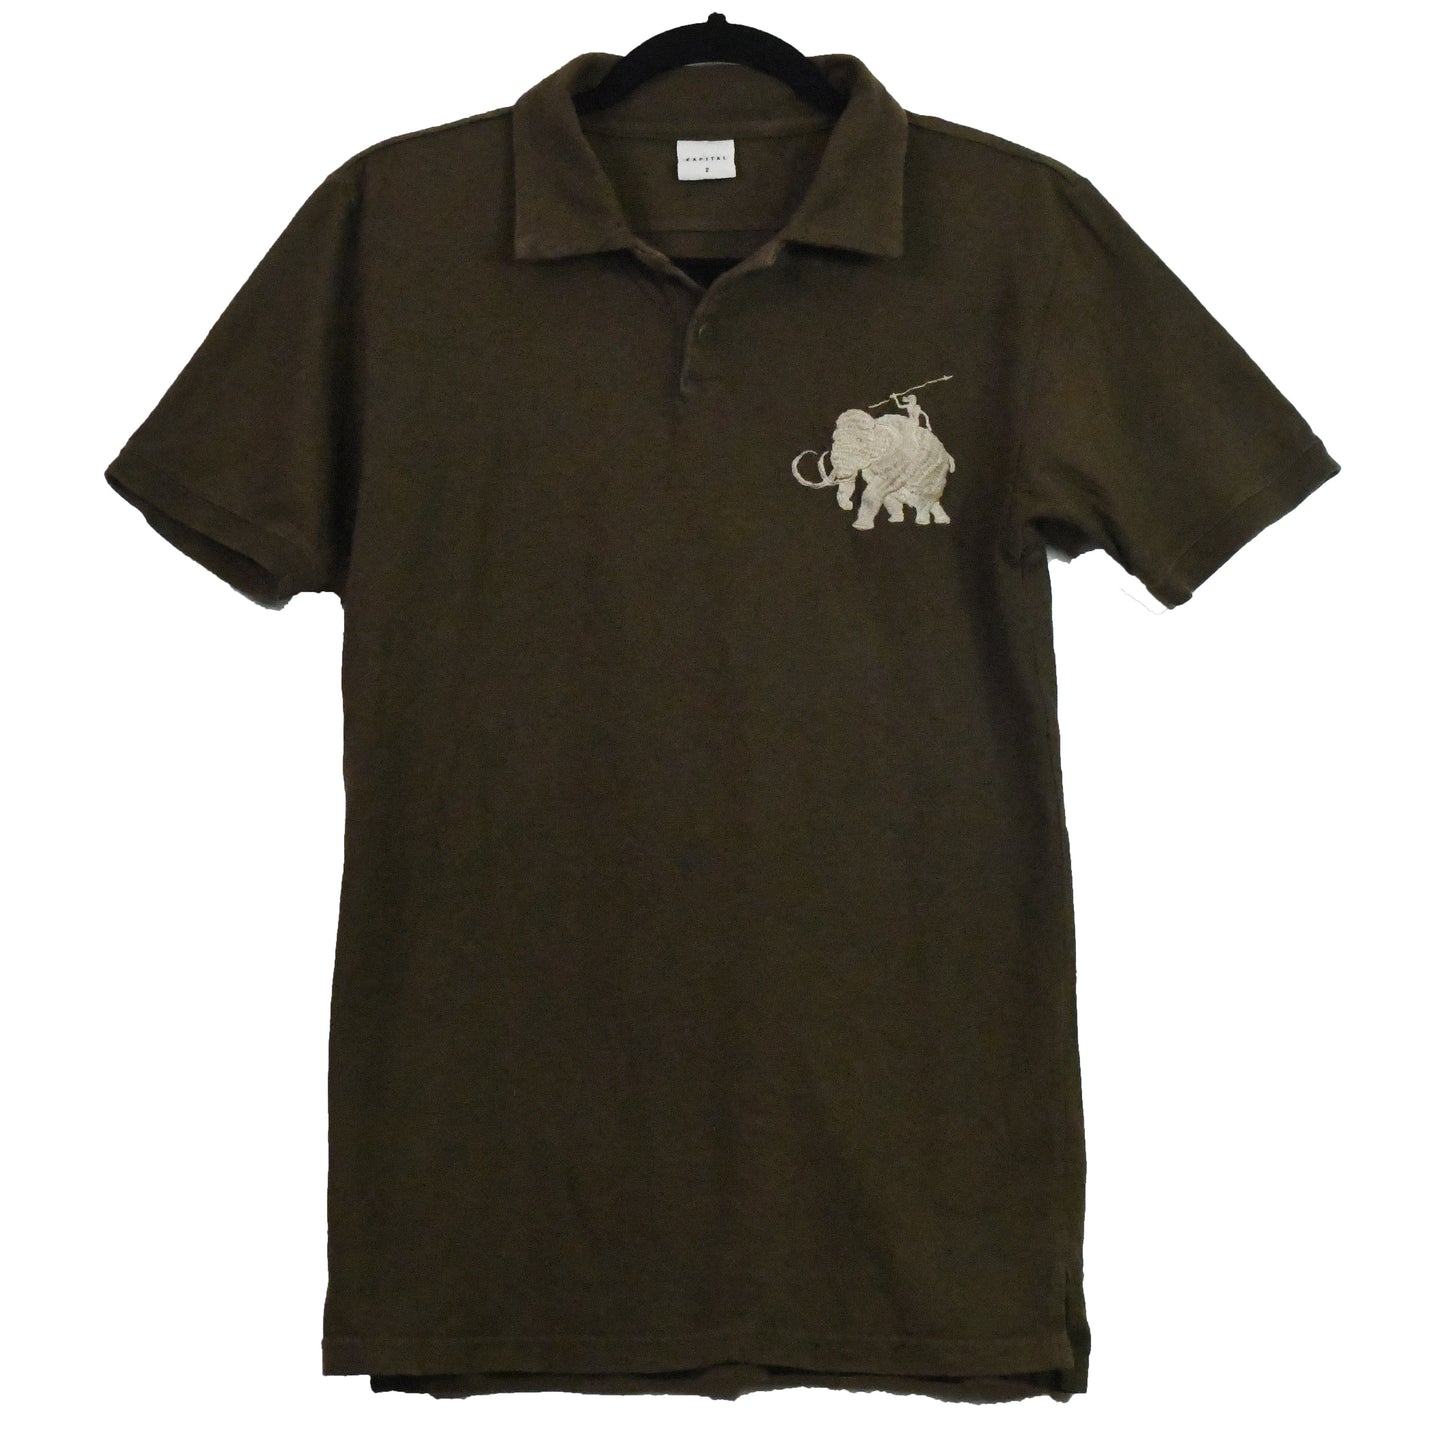 Kapital olive “Polo Spoof” wooly mammoth logo collared shirt 2/Medium